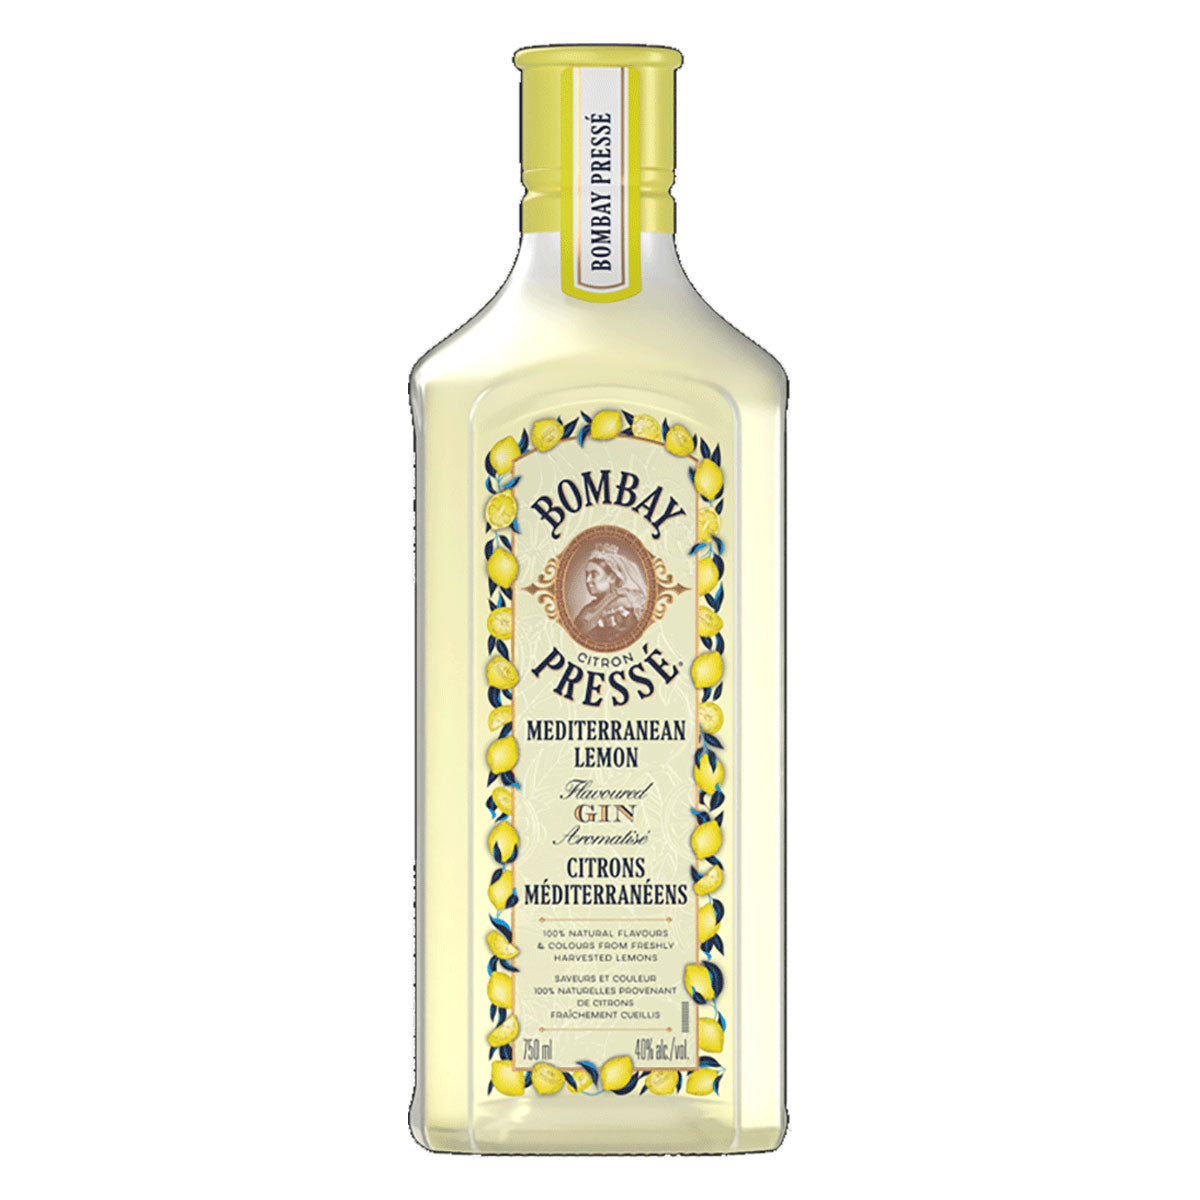 Bombay Presse Citron Mediterranean Lemon – 750ml Gin